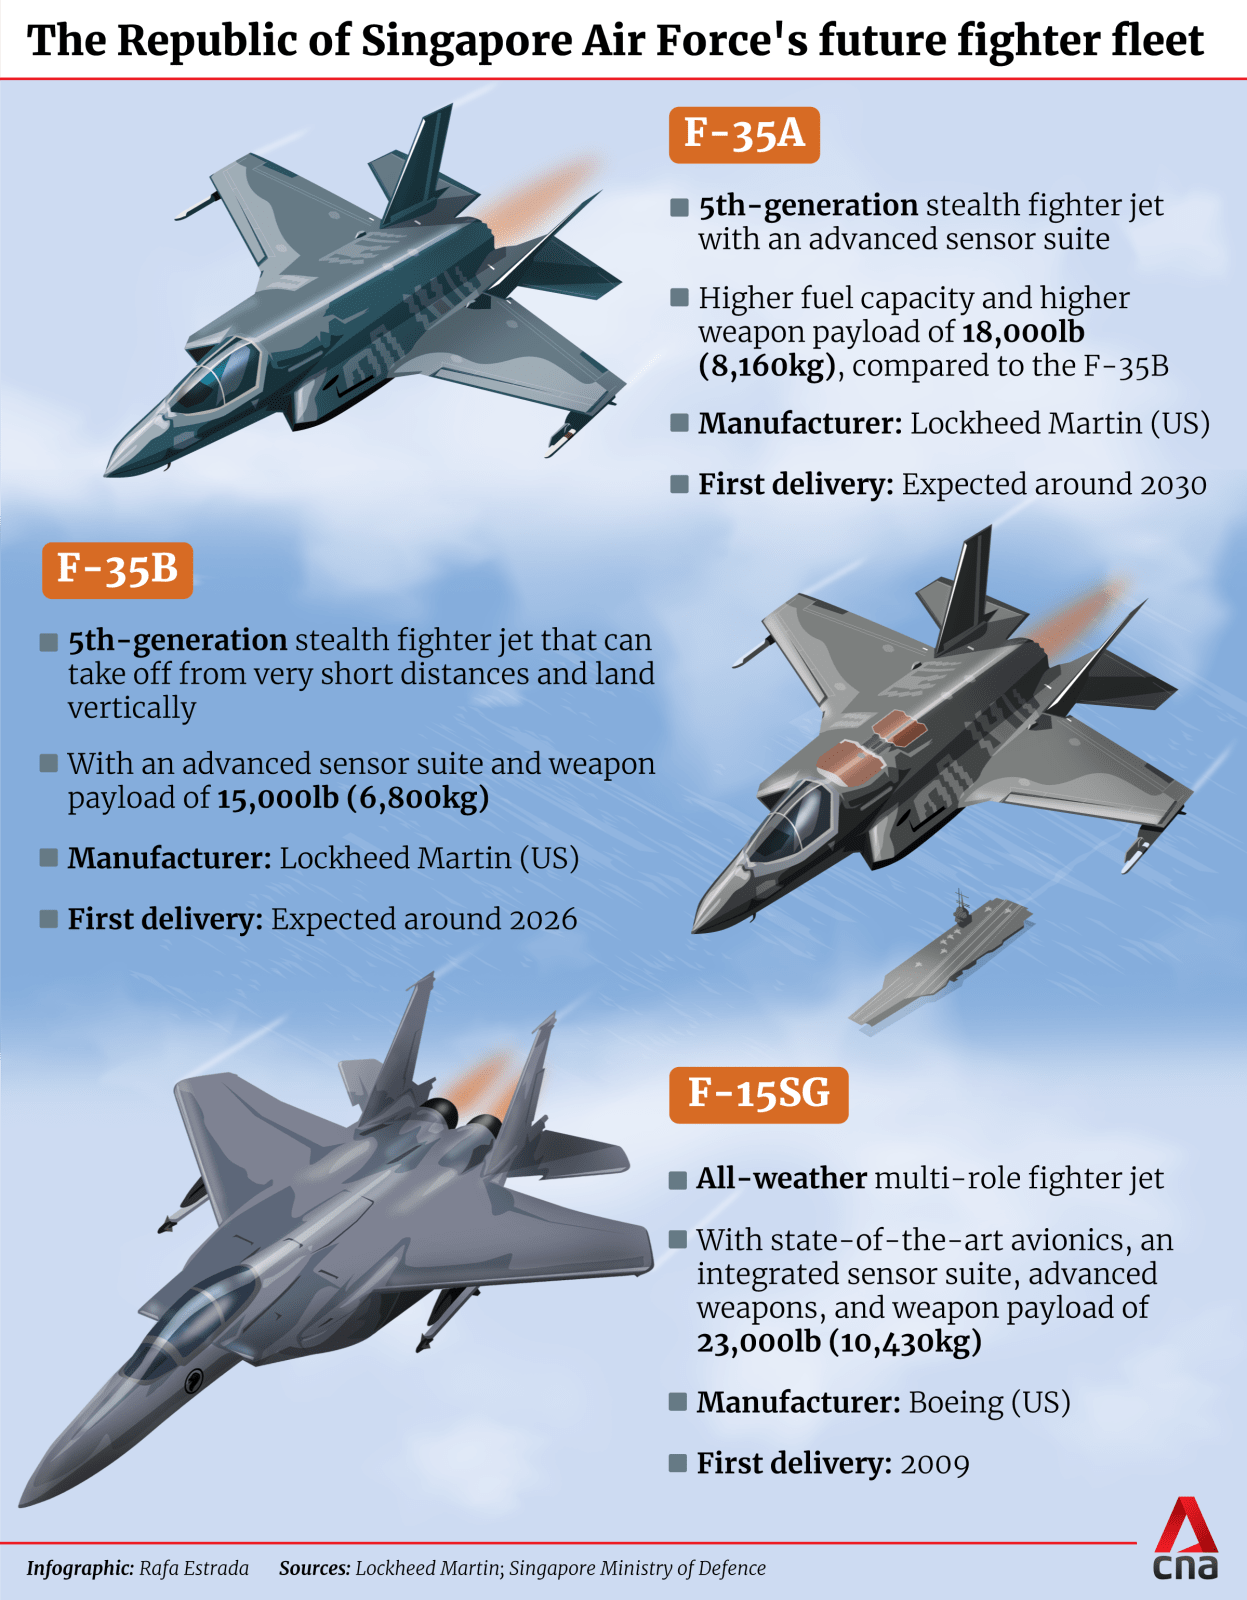 rsaf_air_force_future_fighter_jet_fleet_f-35_f-15sg.png